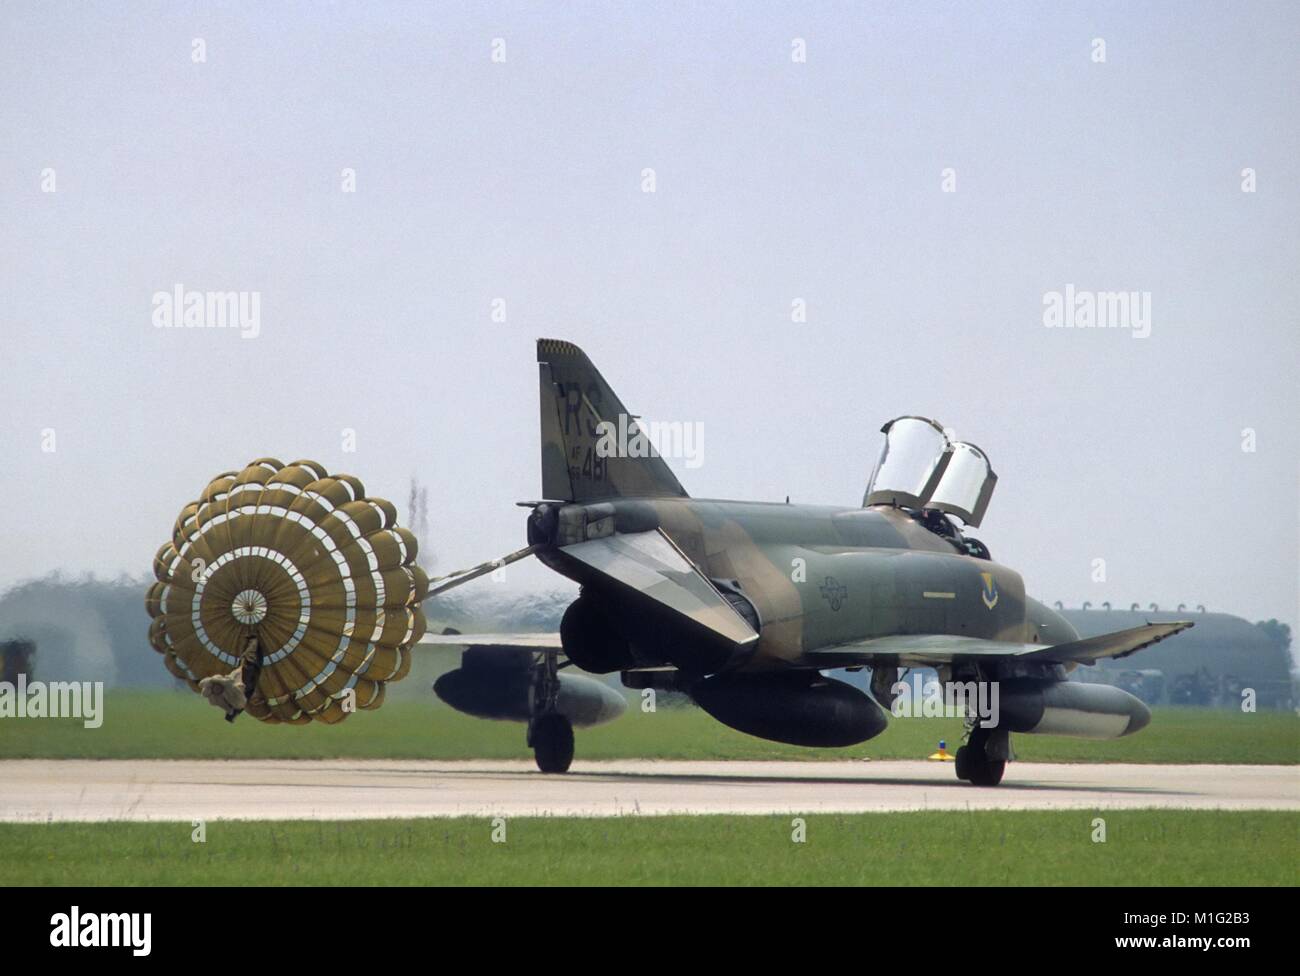 US Air Force Base à Spangdahlem (Allemagne Fédérale), F 4 Phantom II de chasse 52° Tactical Fighter Wing, Juin 1985 Banque D'Images